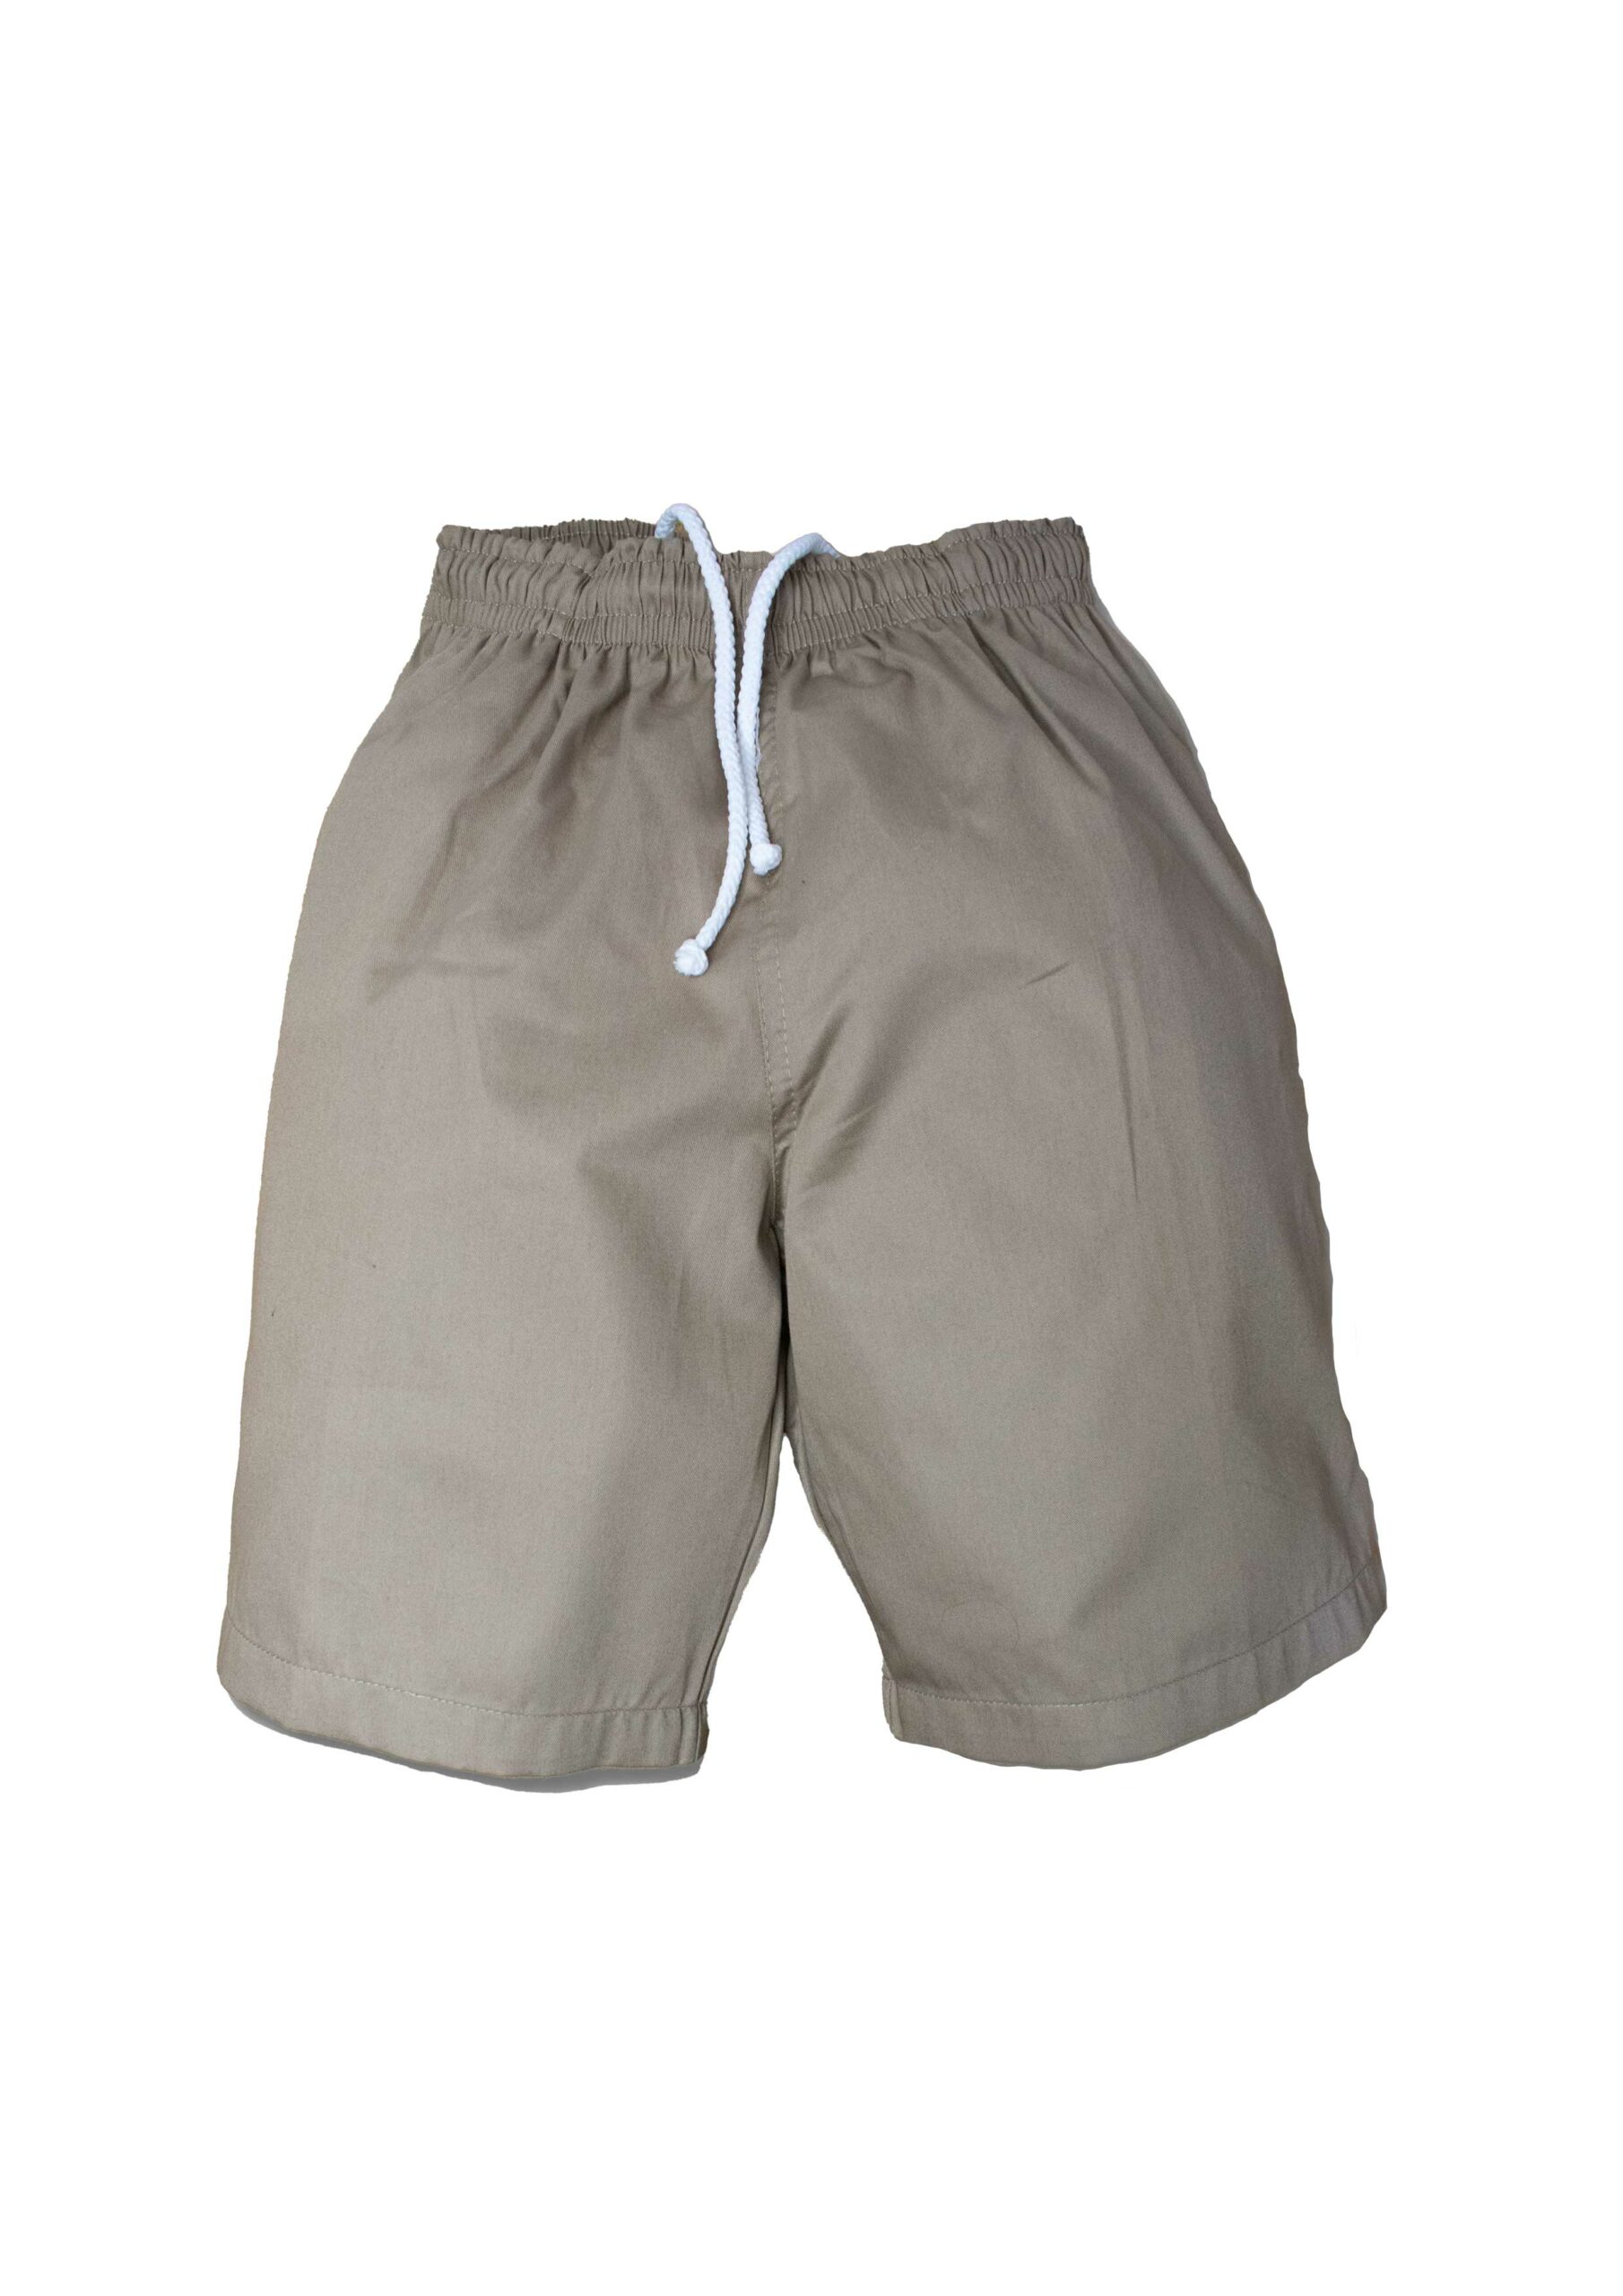 Rhino Boxer Shorts - No Cargo - Big John Online Clothing Company